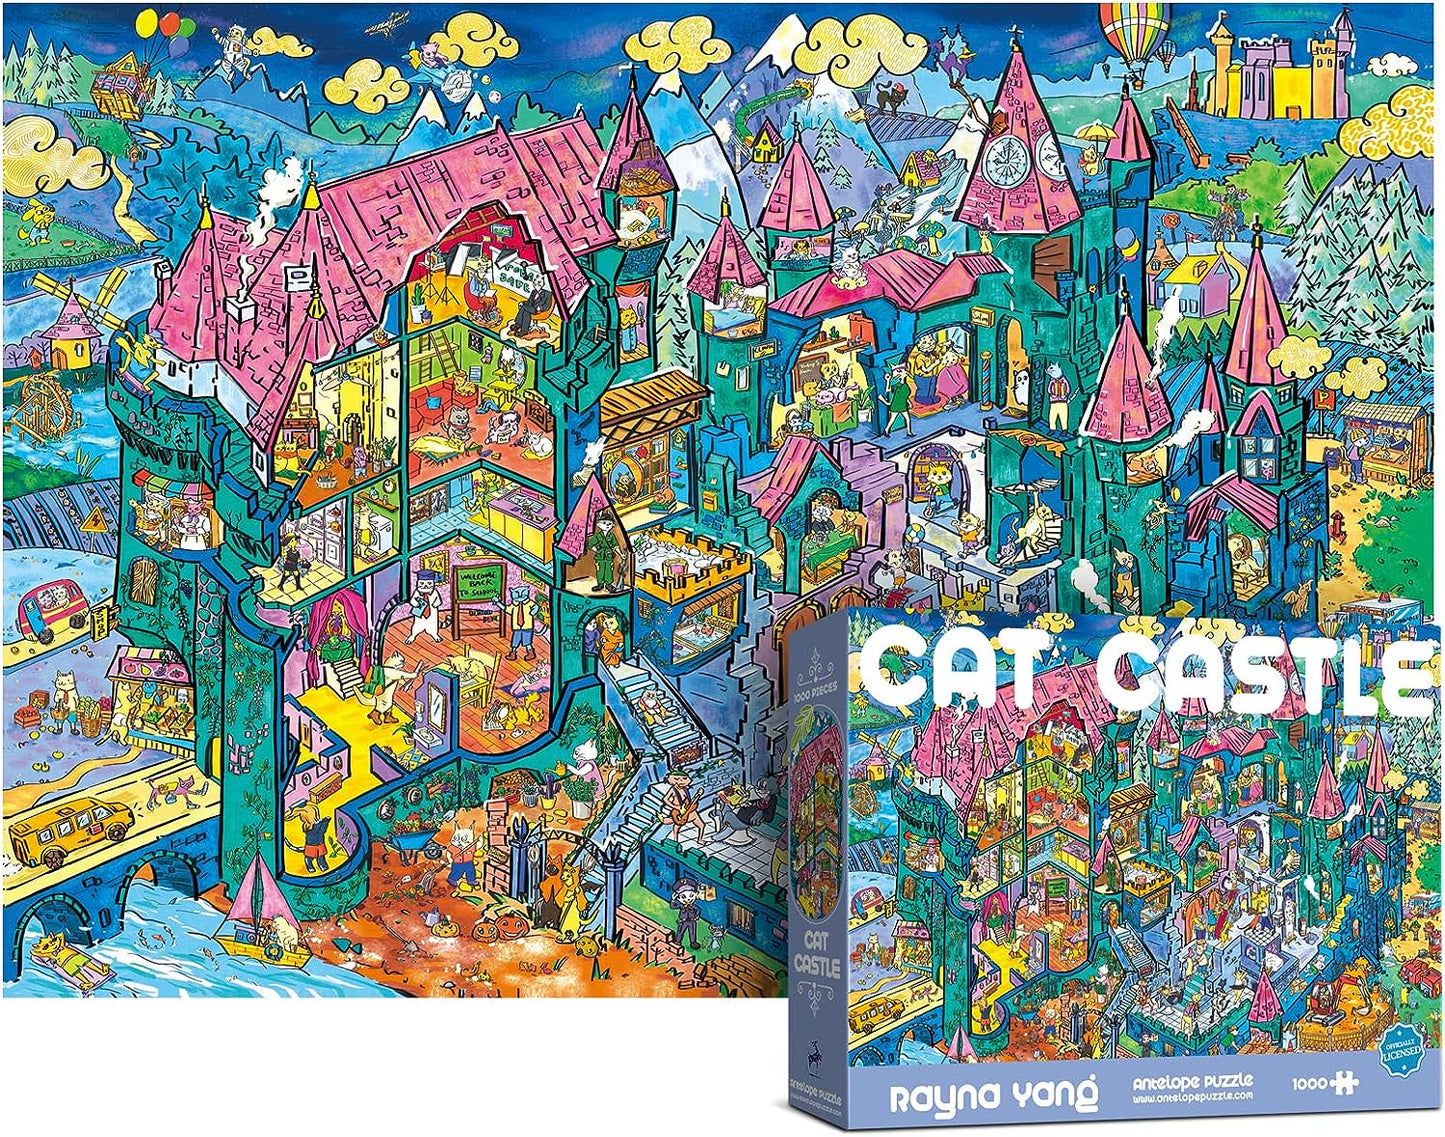 Antelope 2 in 1 1000 Piece Puzzle Bundle - Cat Castle - 1000 Piece Jigsaw Puzzle Bundle with Drive In Movie - 1000 Piece Jigsaw Puzzle